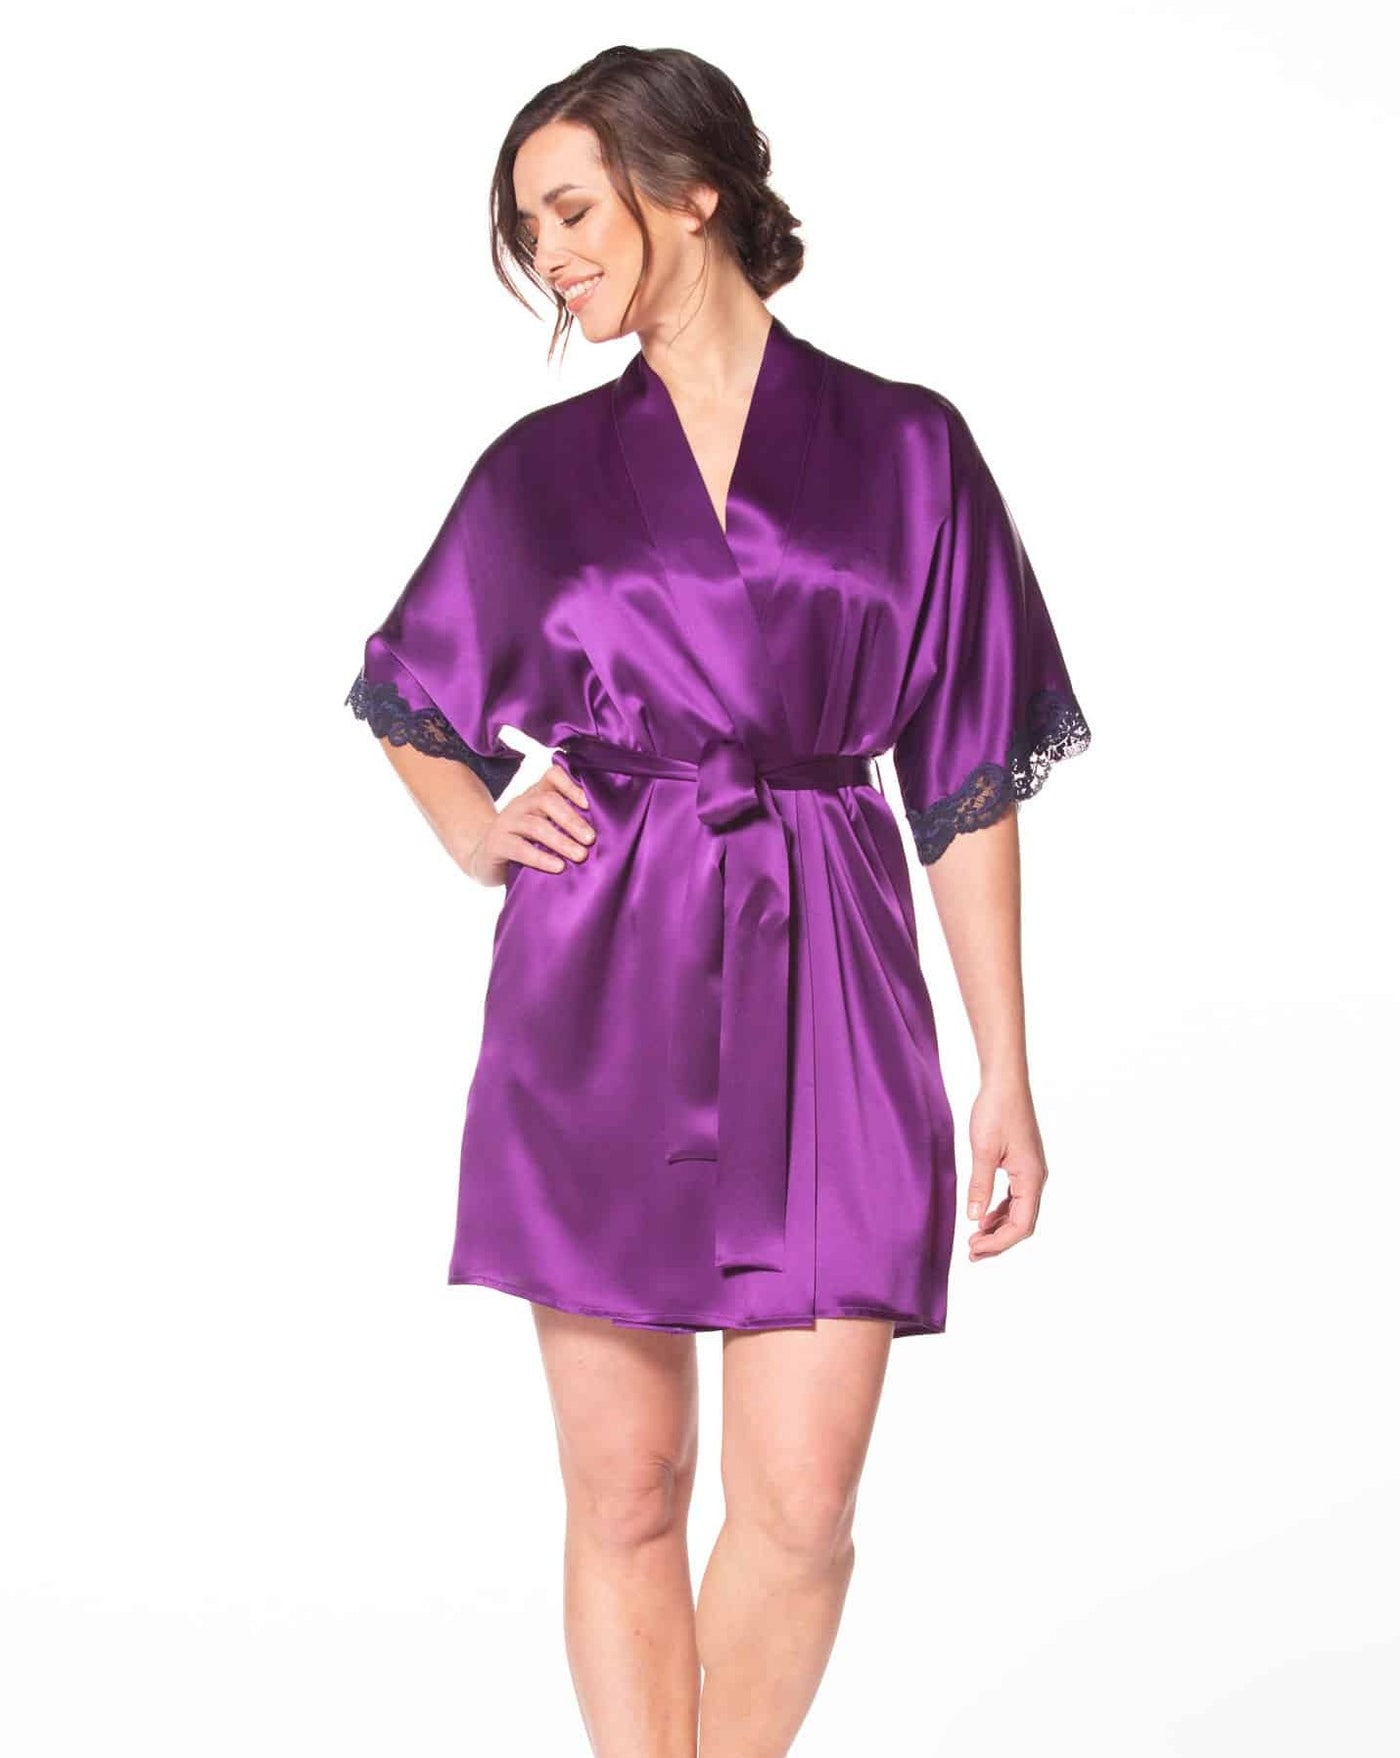 Emperor Purple Boudoir Robe: Size S